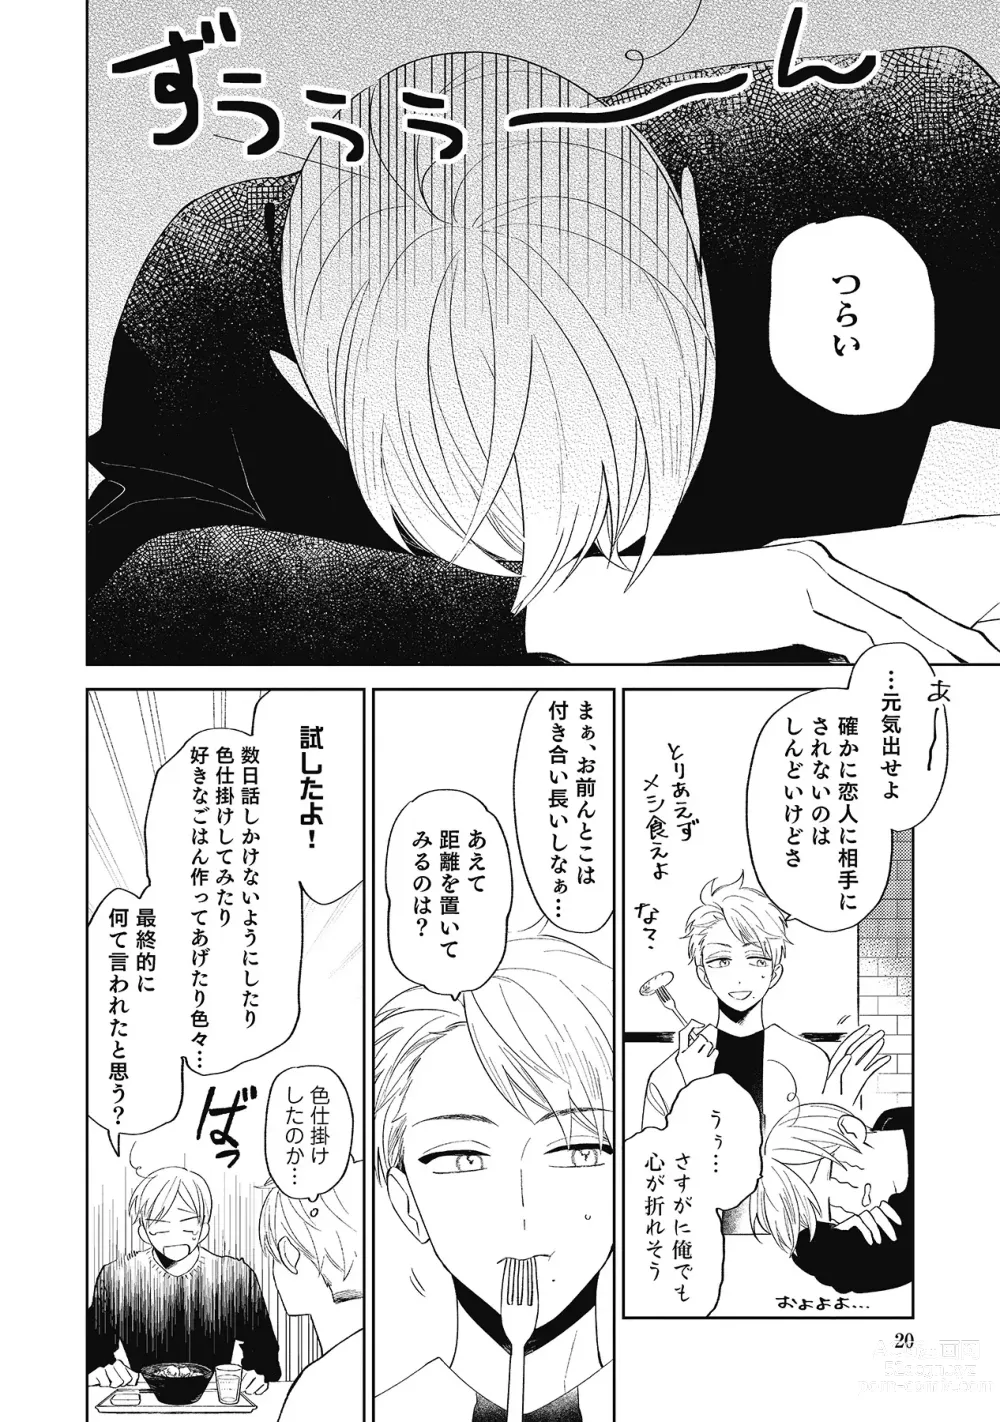 Page 20 of manga Sentimental Darling